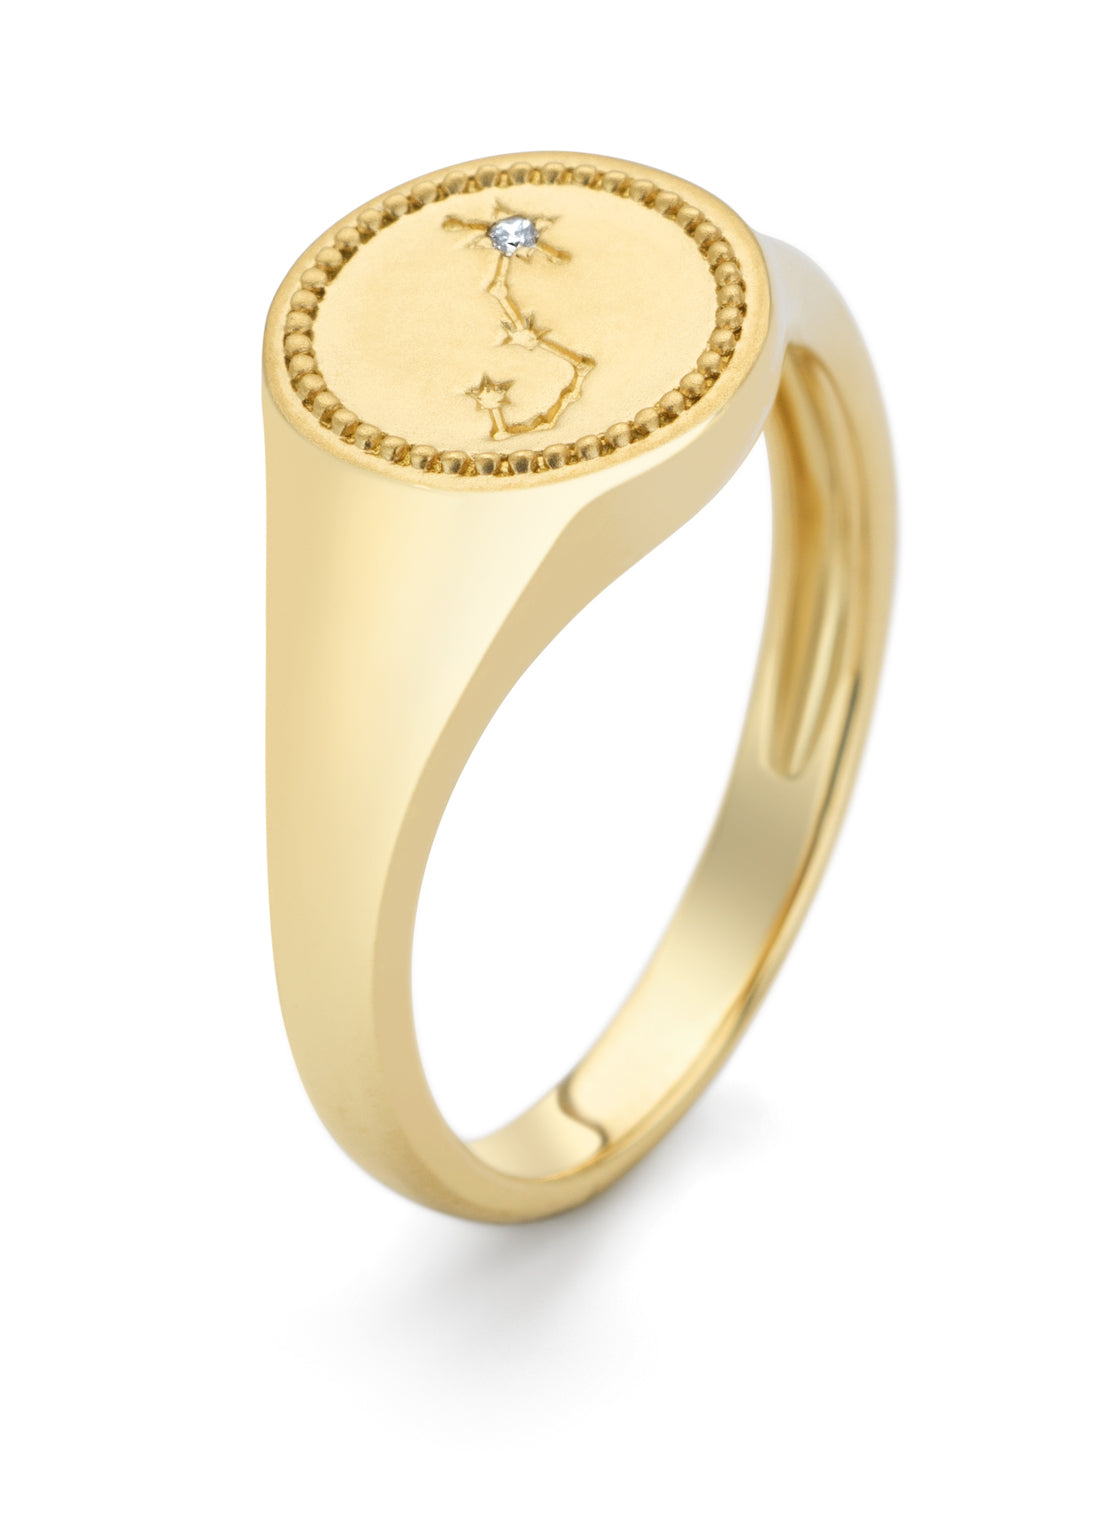 Yellow gold signet ring, zodiac scorpio (scorpion)